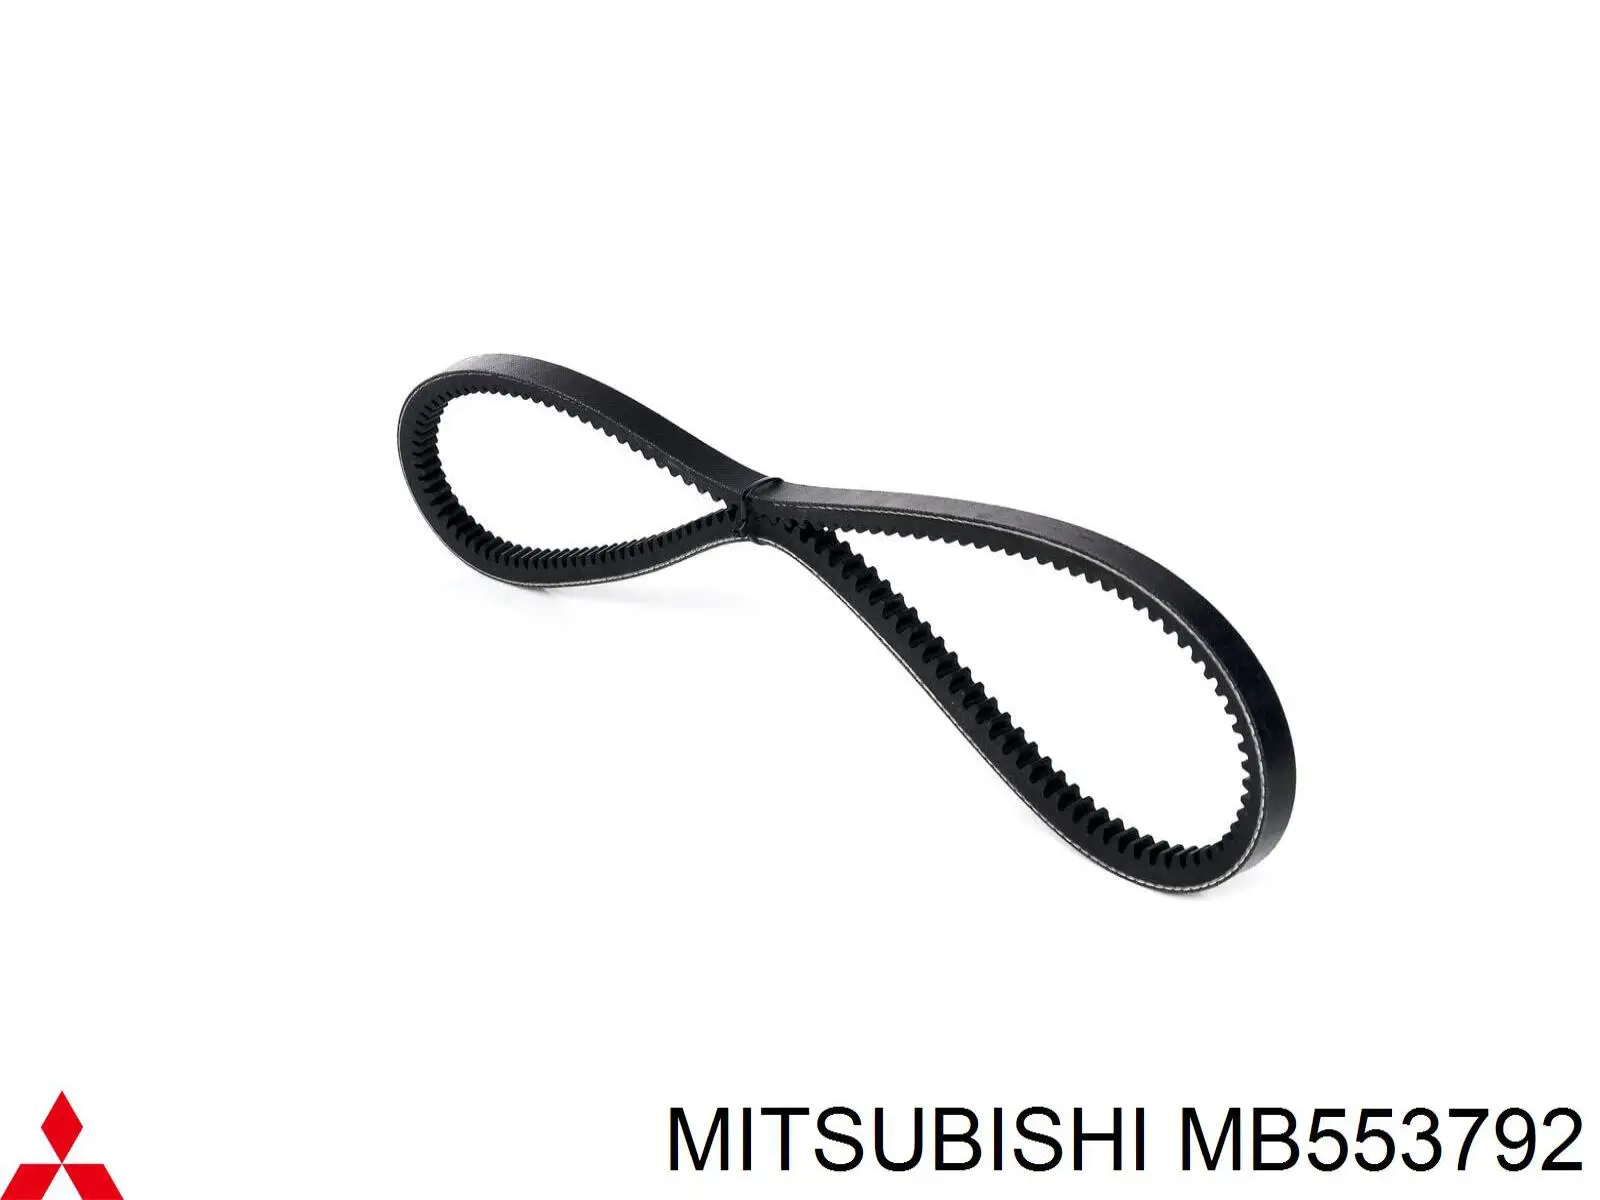 MB553792 Mitsubishi ремень генератора